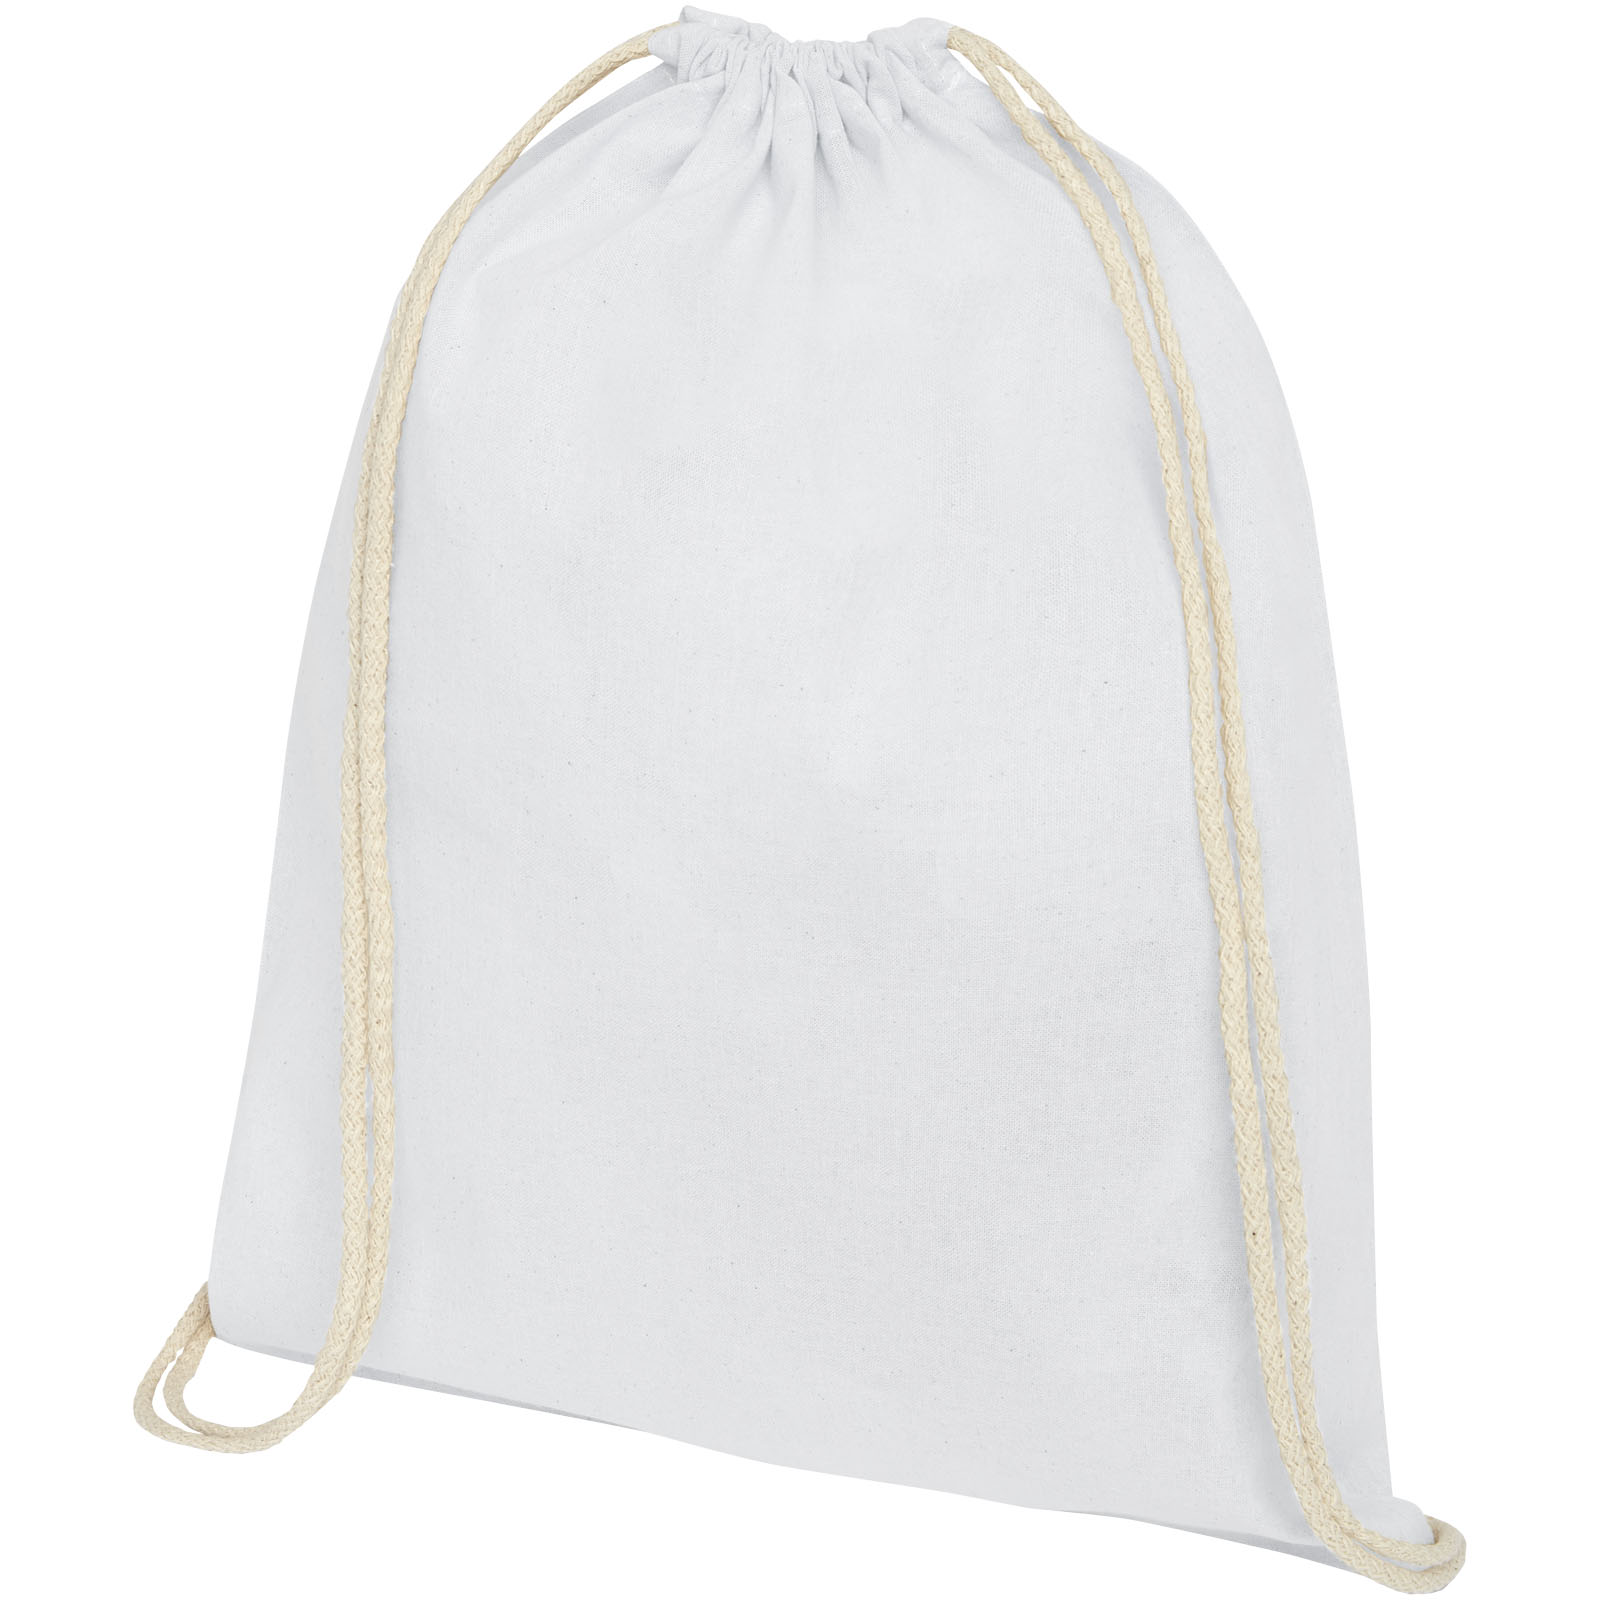 Heavy-Duty Cotton Drawstring Bag - Aconbury